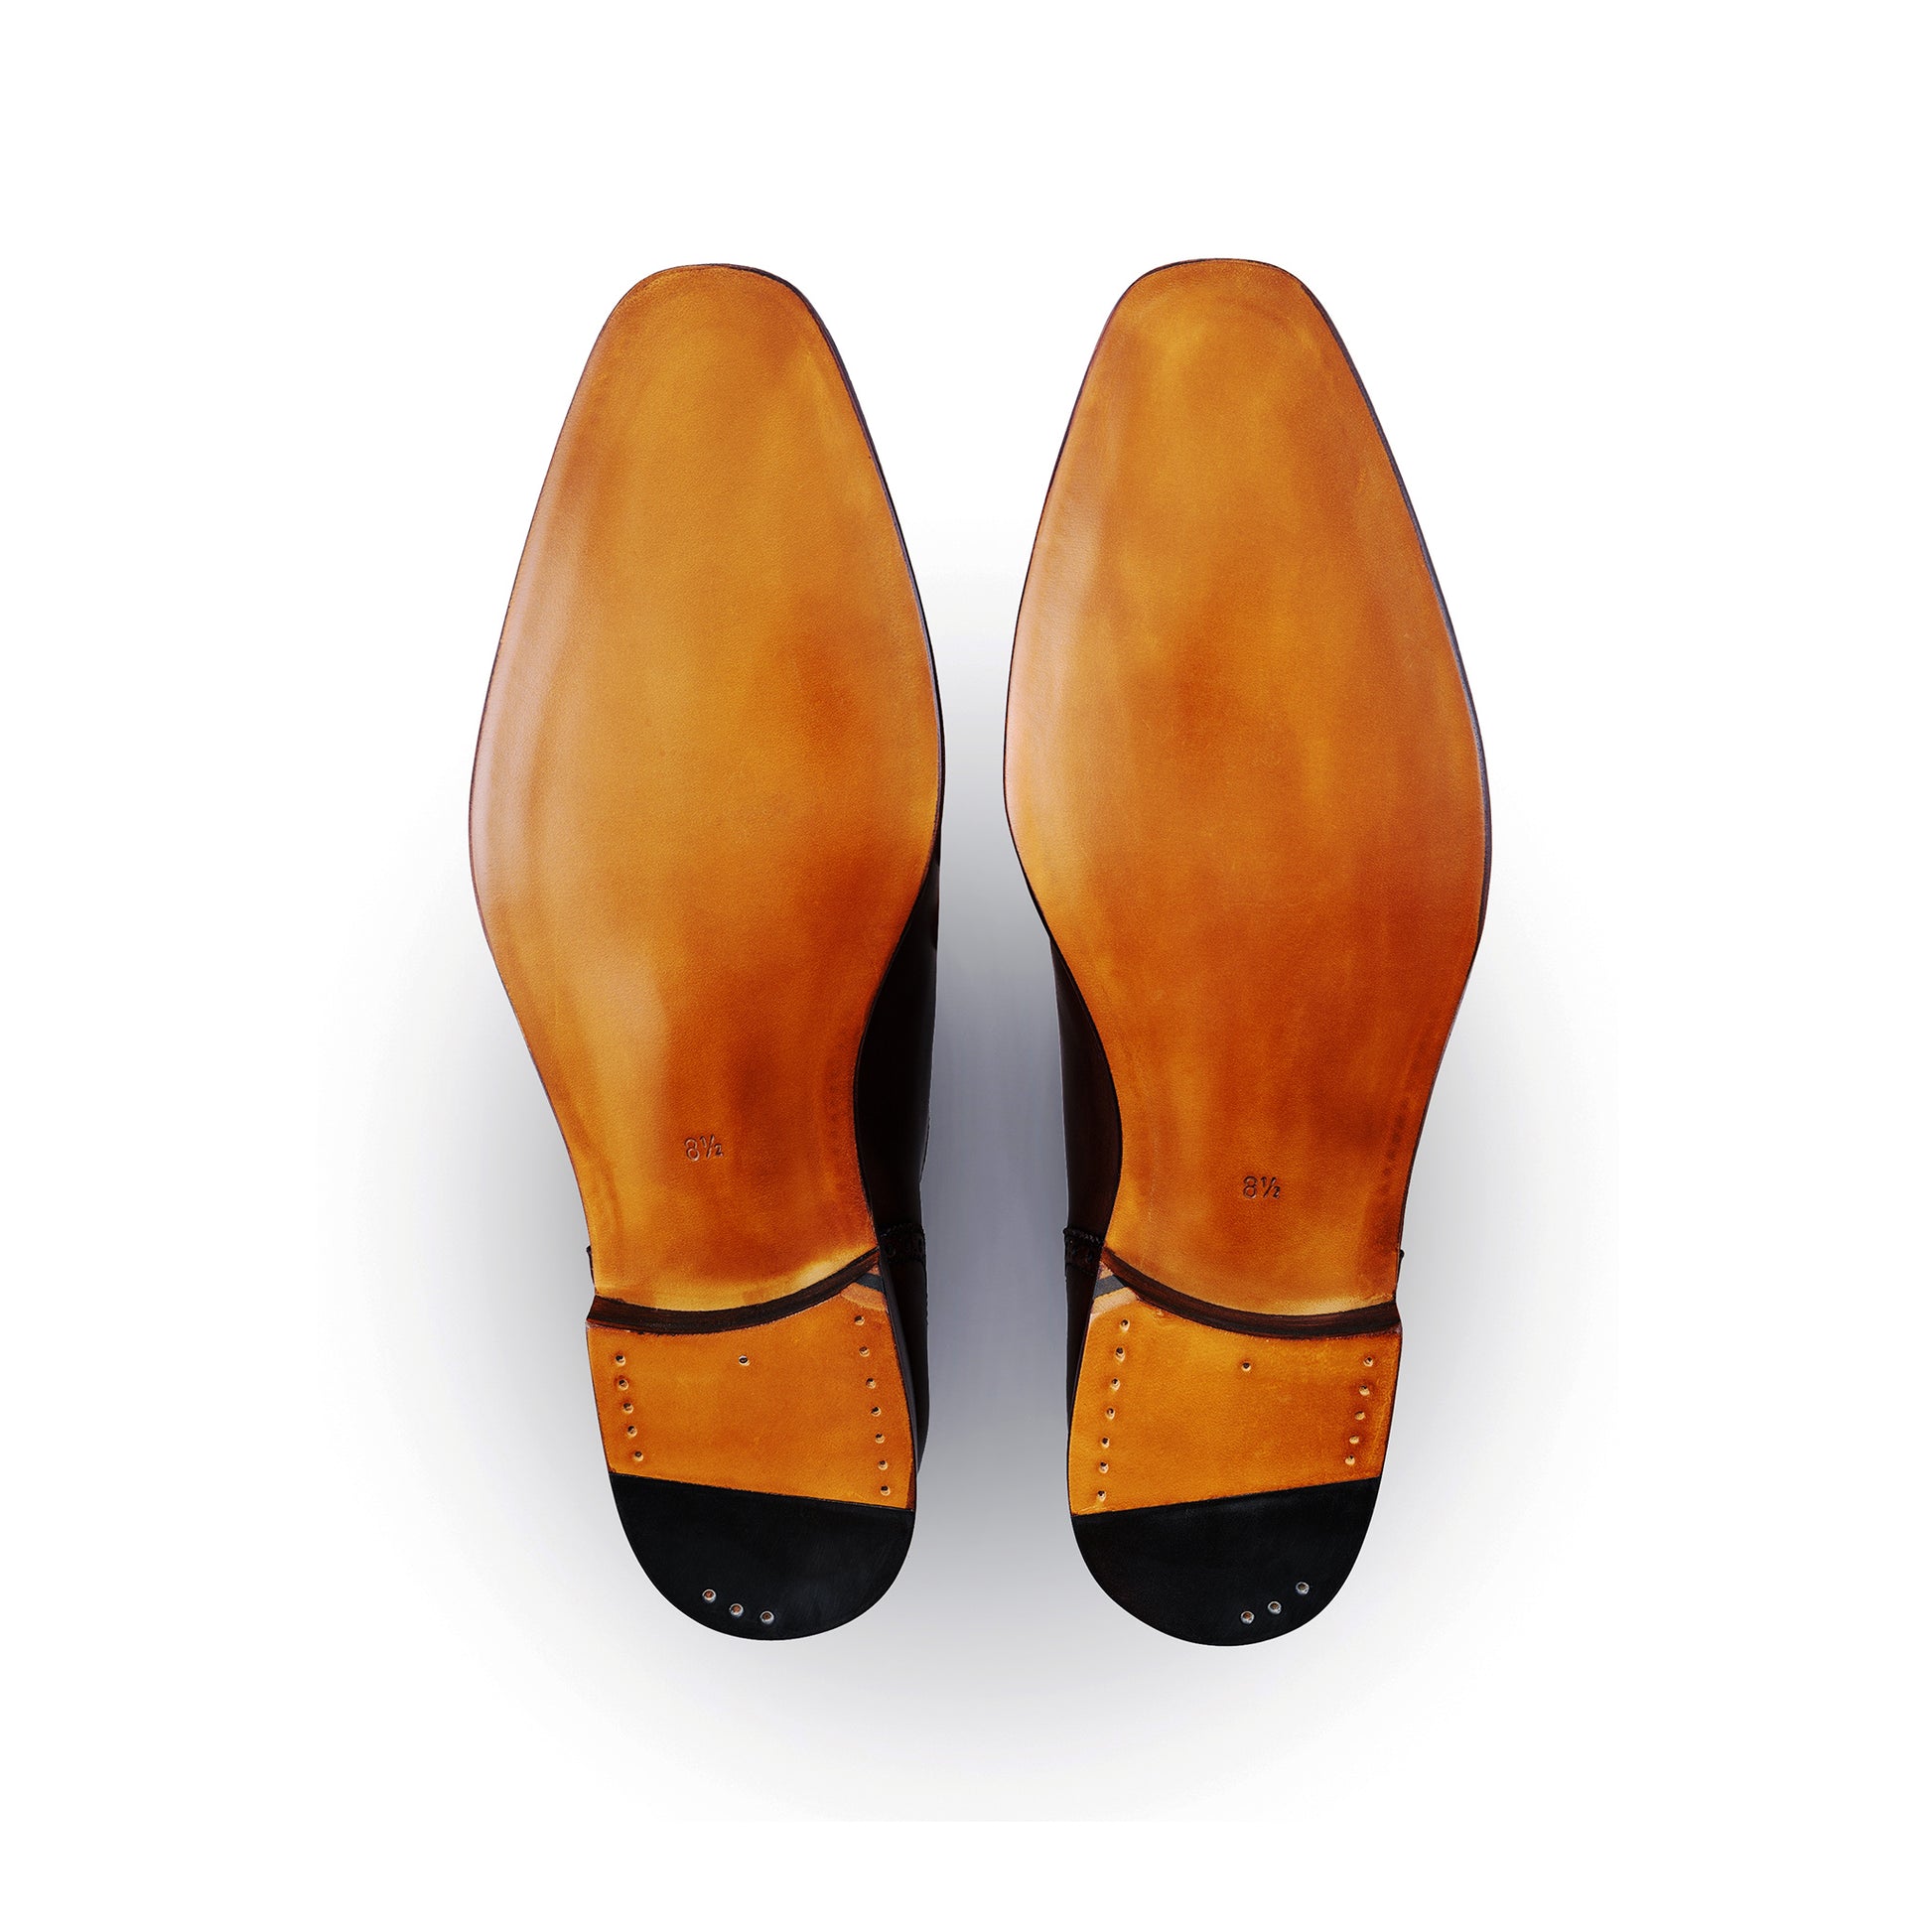 TLB Mallorca leather shoes 527 / ALAN / BOXCALF BLACK